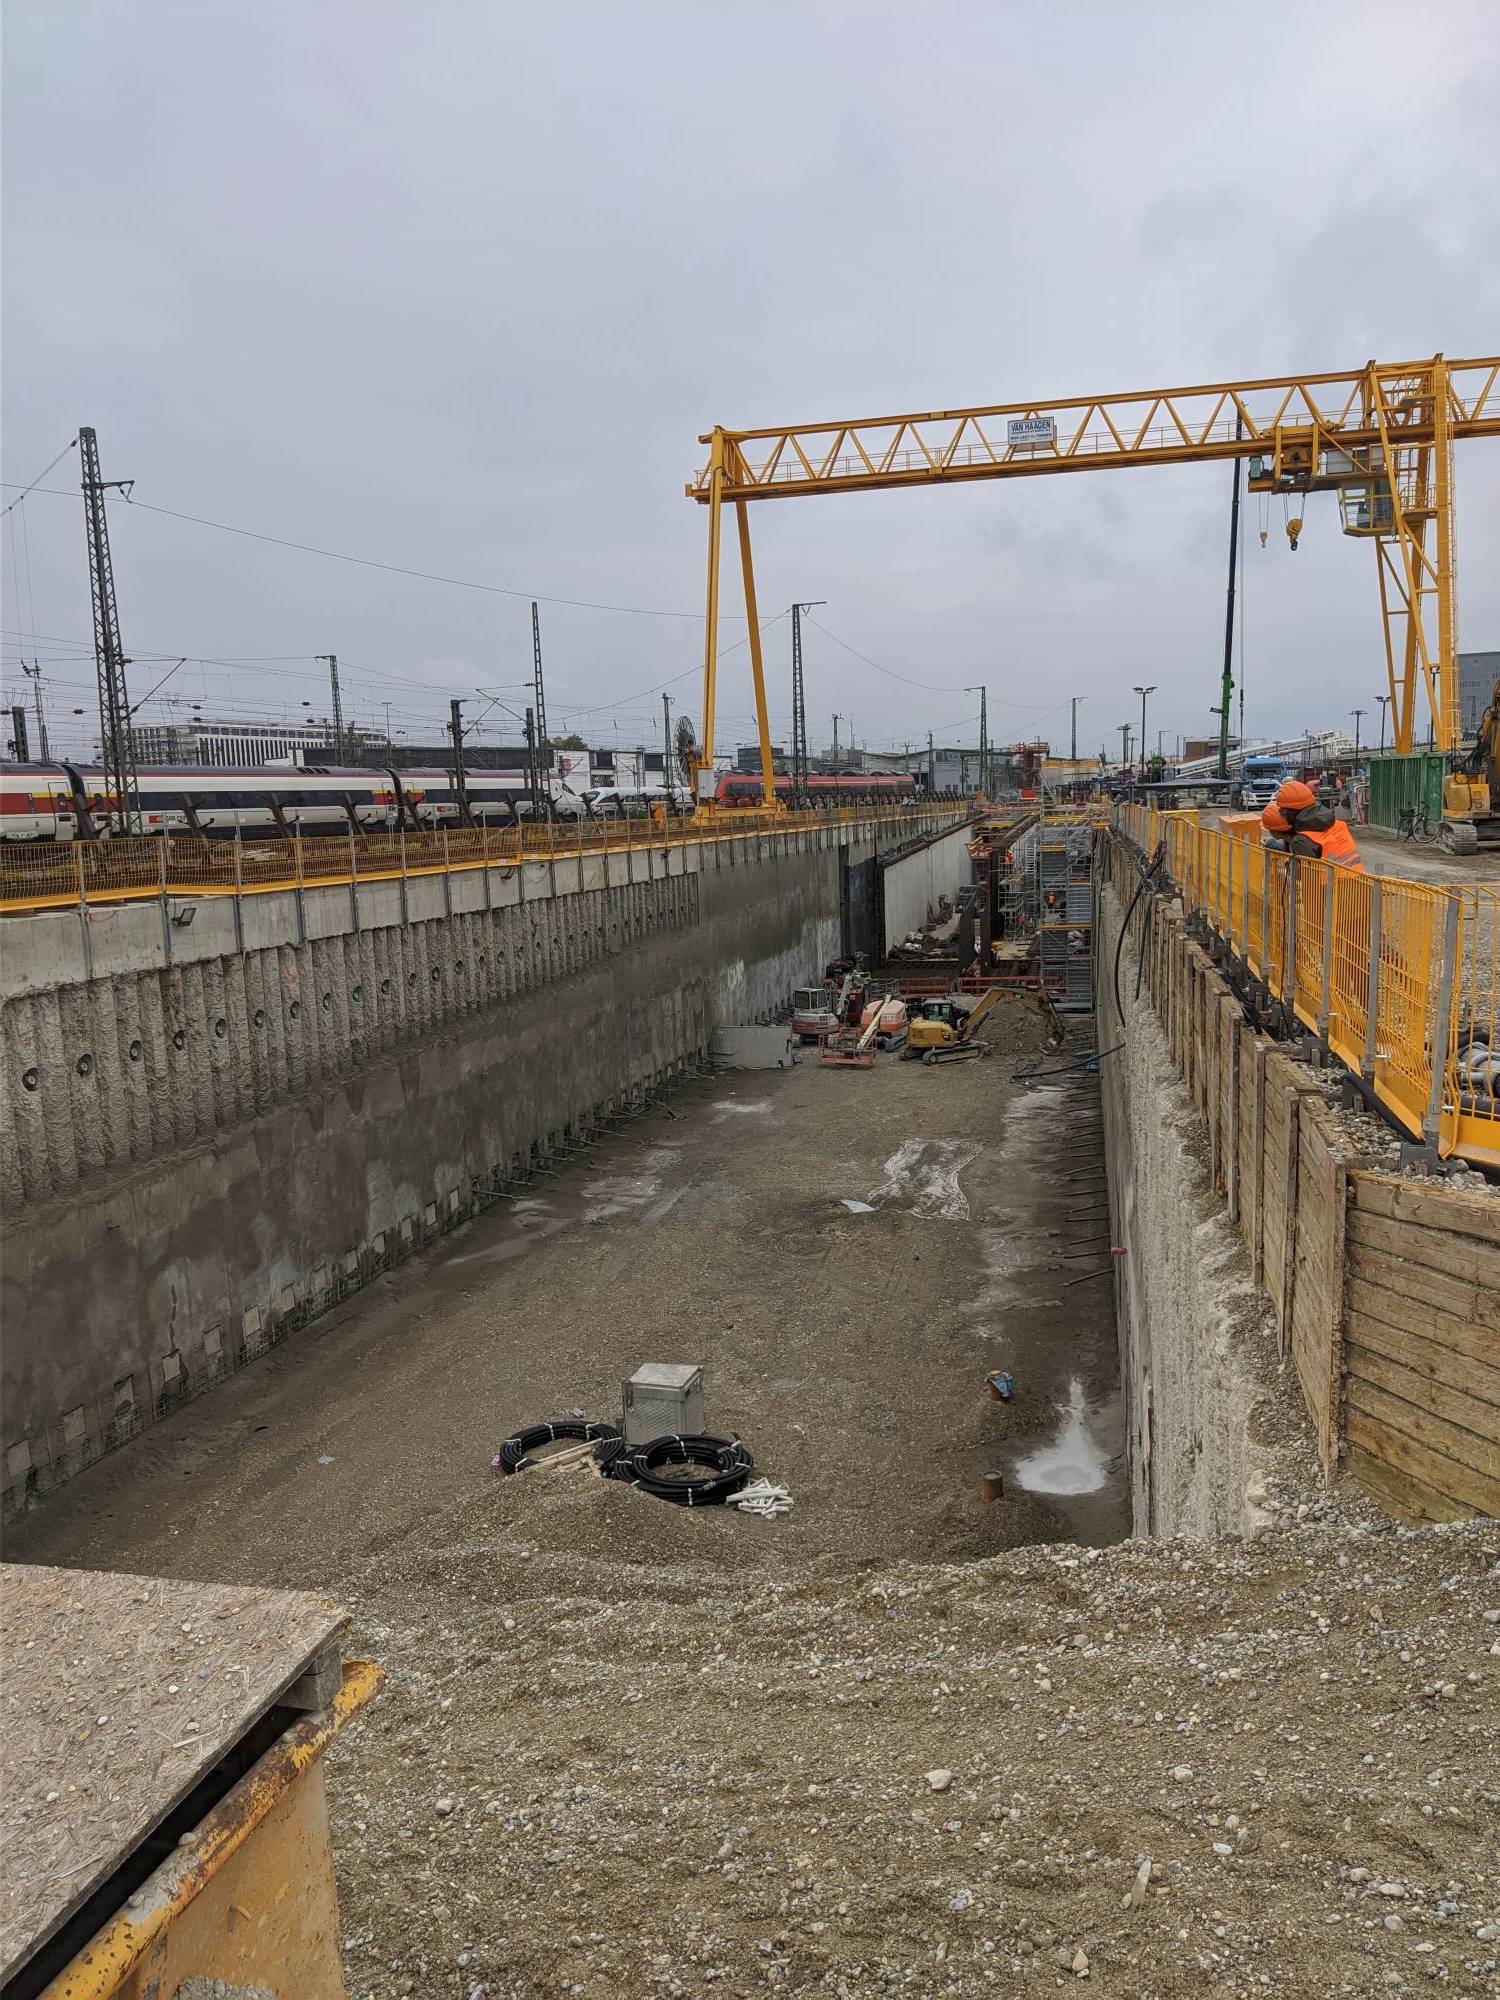 Blick in die Baugrube in offener Tunnelbauweise an der Donnersberger Brücke